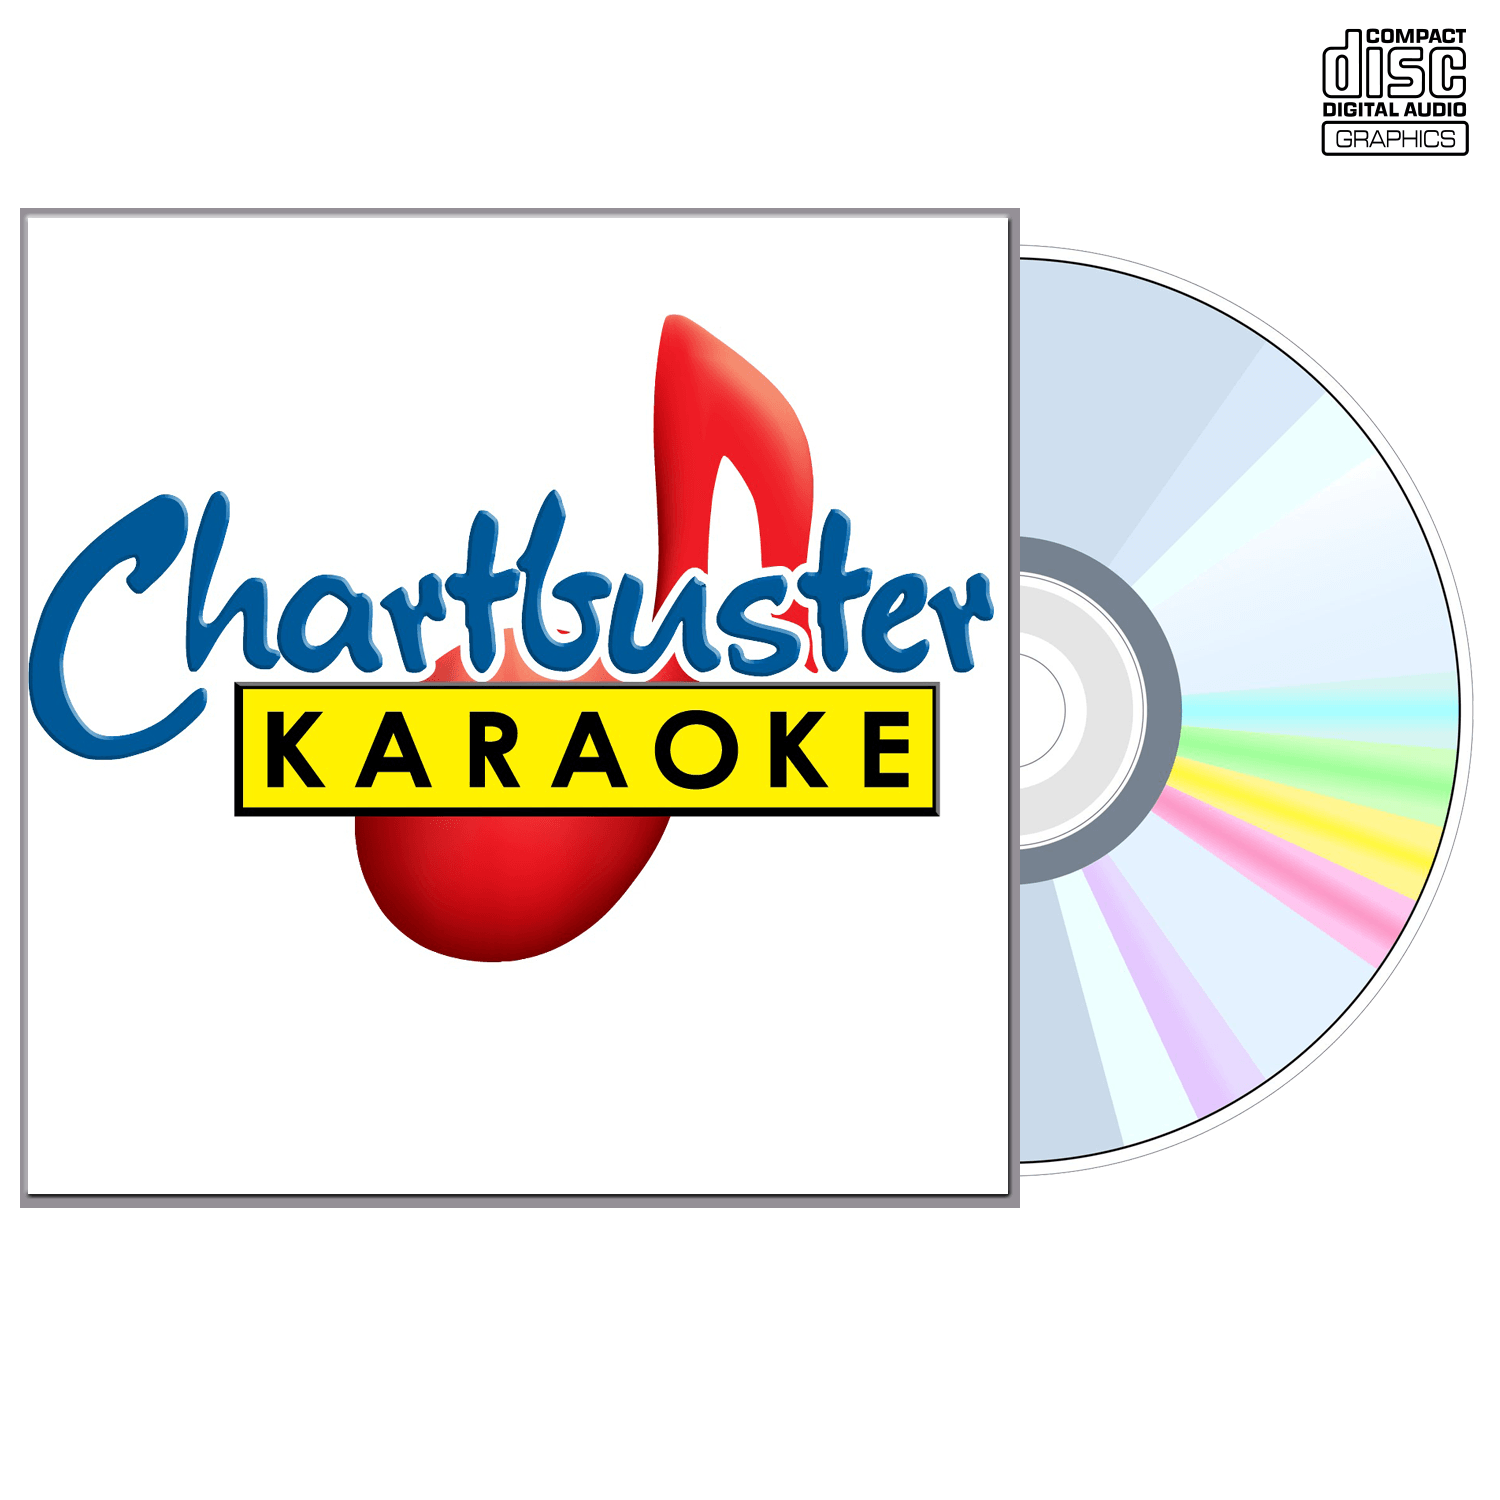 Sounds Of Sixties Vol 04 - CD+G - Chartbuster Karaoke - Karaoke Home Entertainment